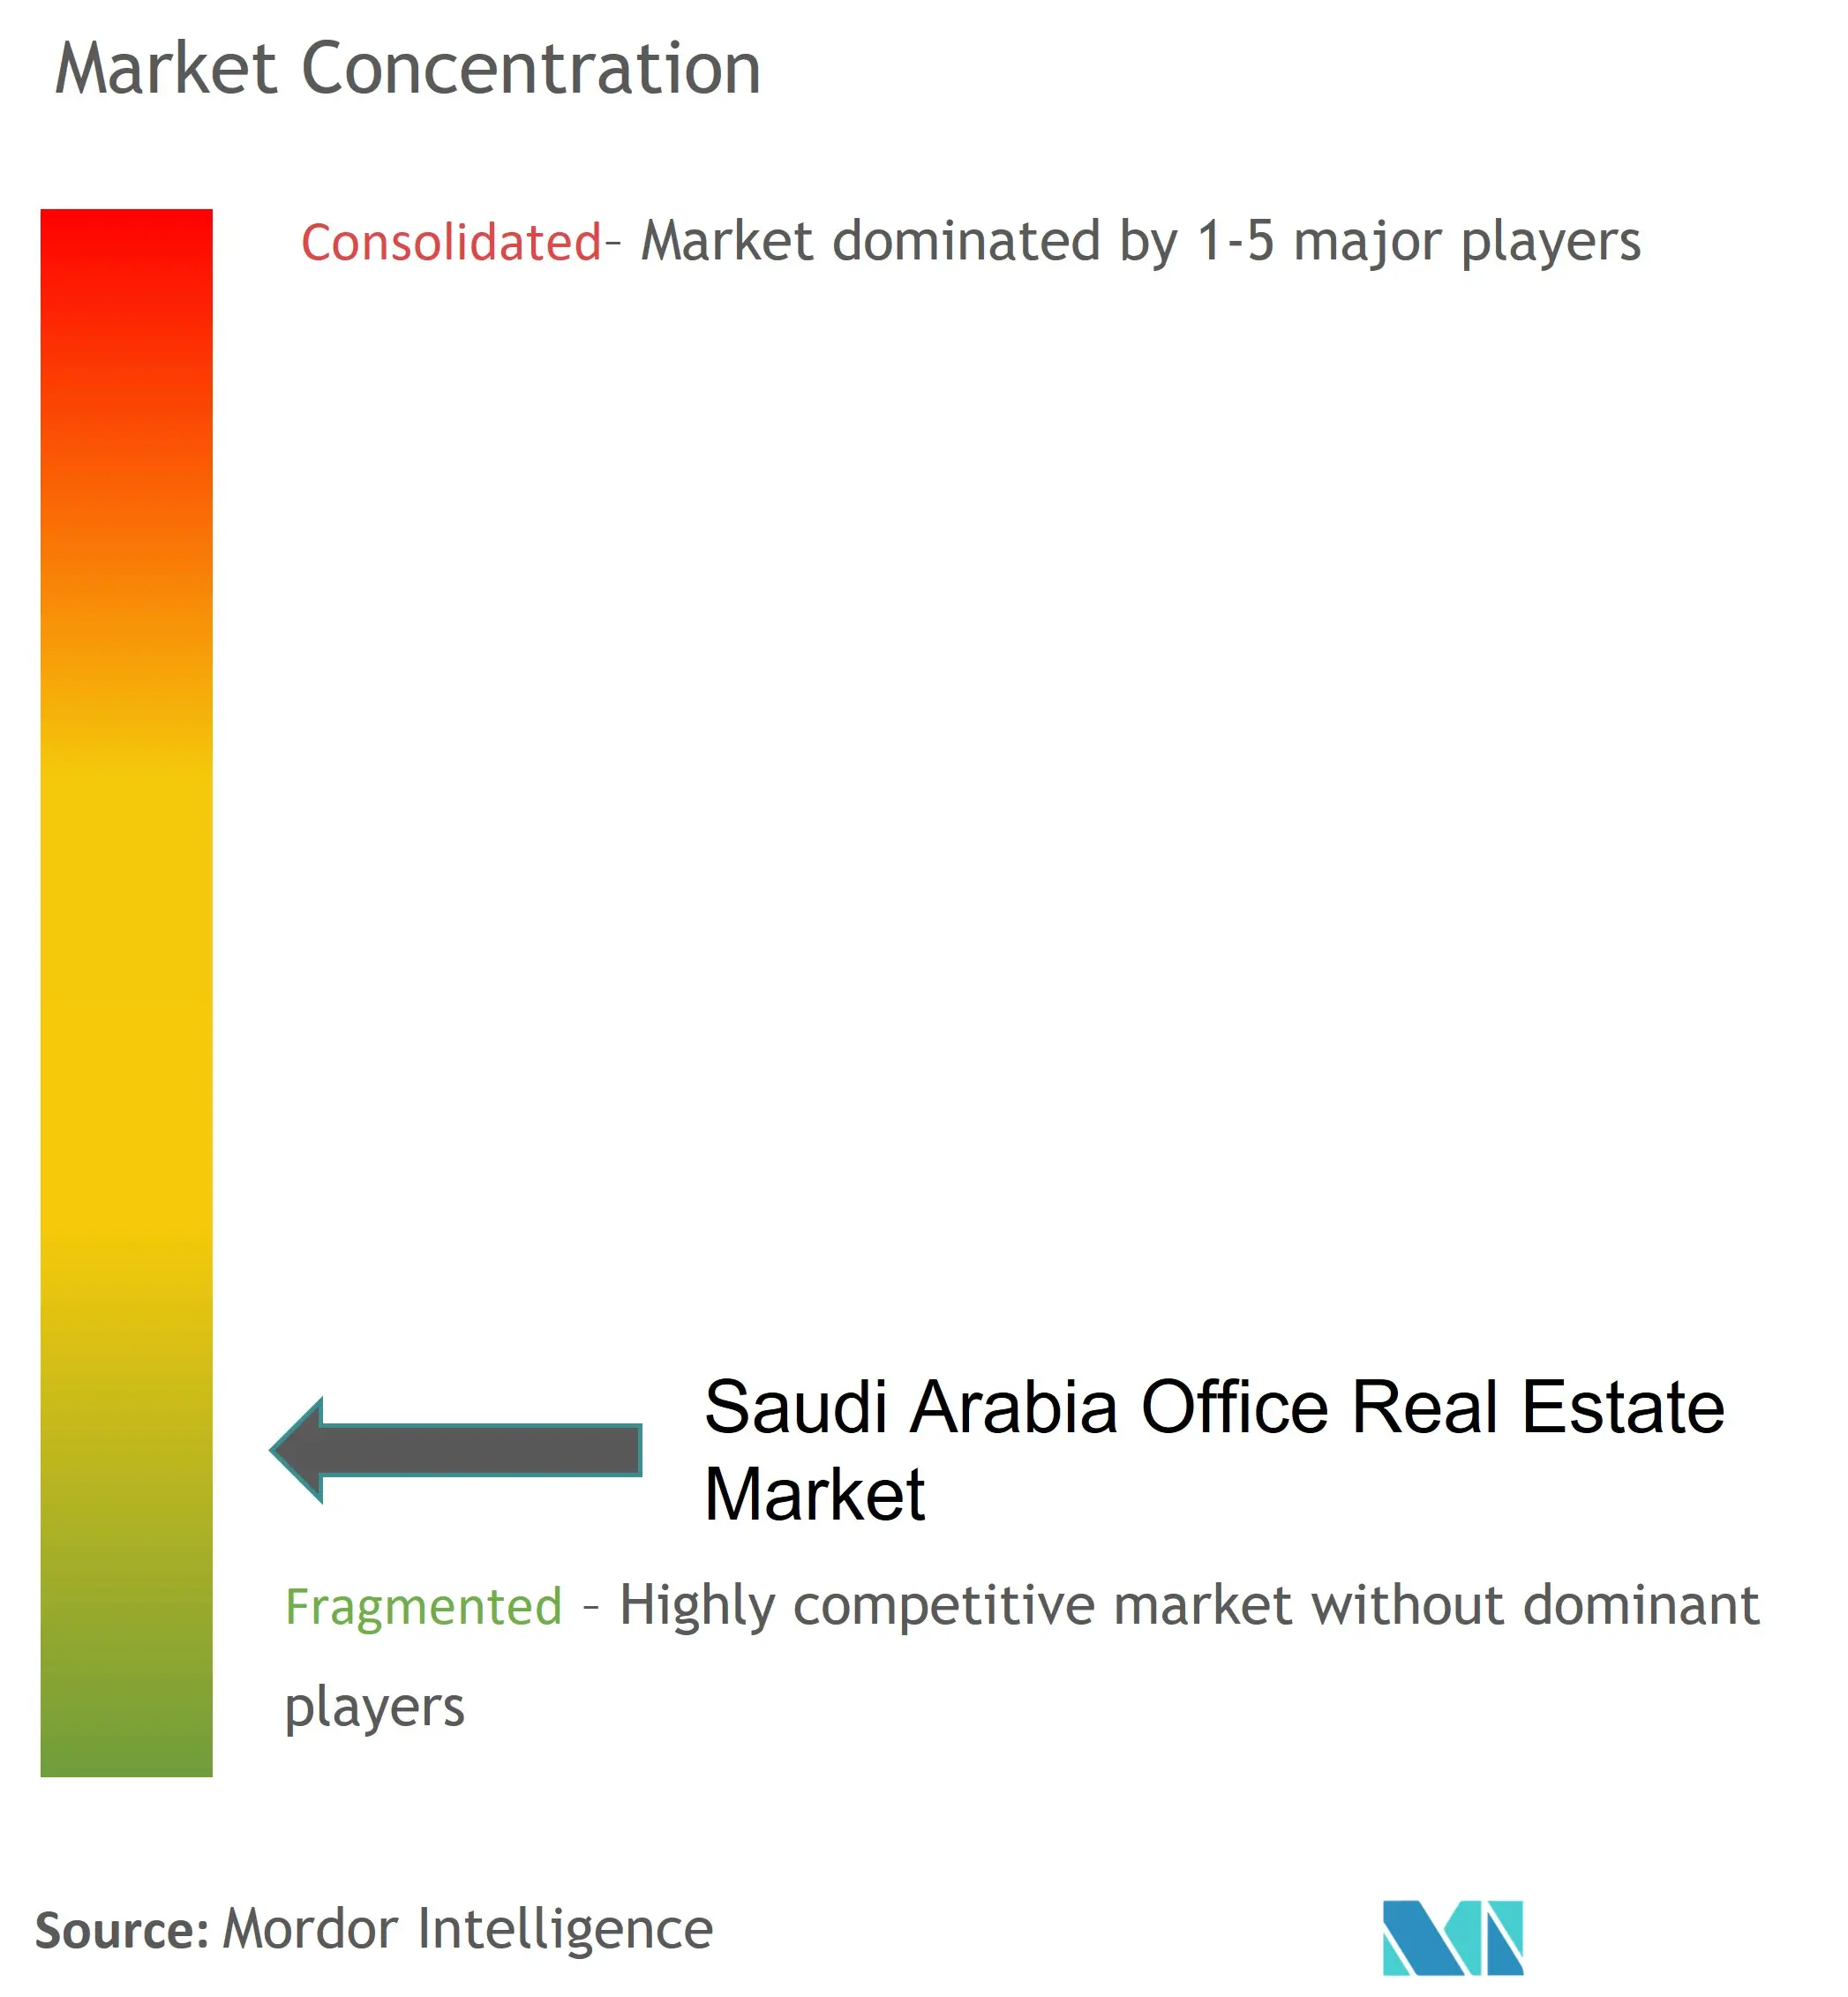 Saudi Arabia Office Real Estate Market - Competitive Landscape